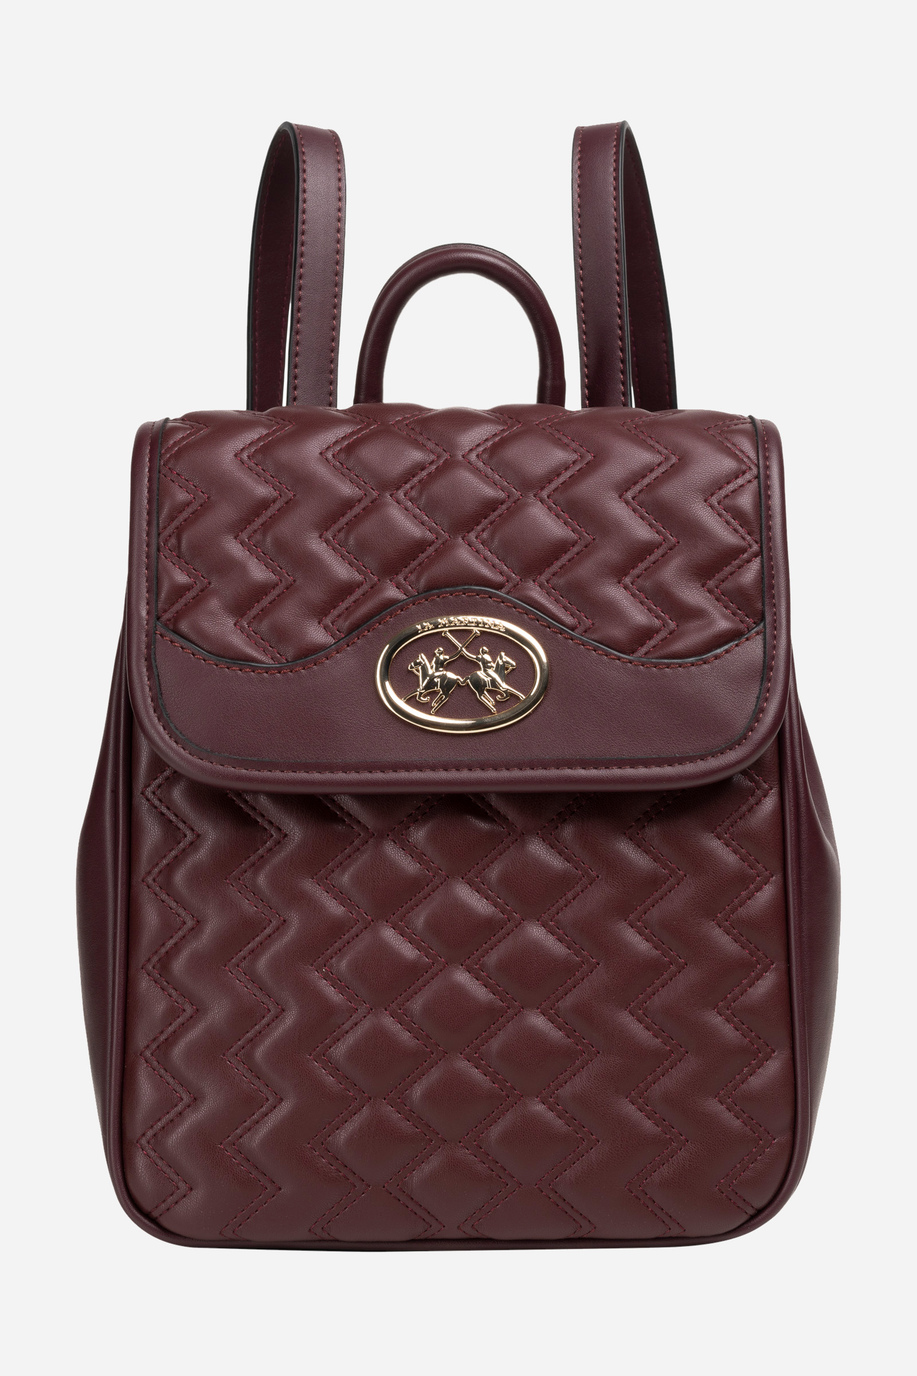 Backpack solid color burgundy fabric pu - Isabel - Gifts under €150 for her | La Martina - Official Online Shop